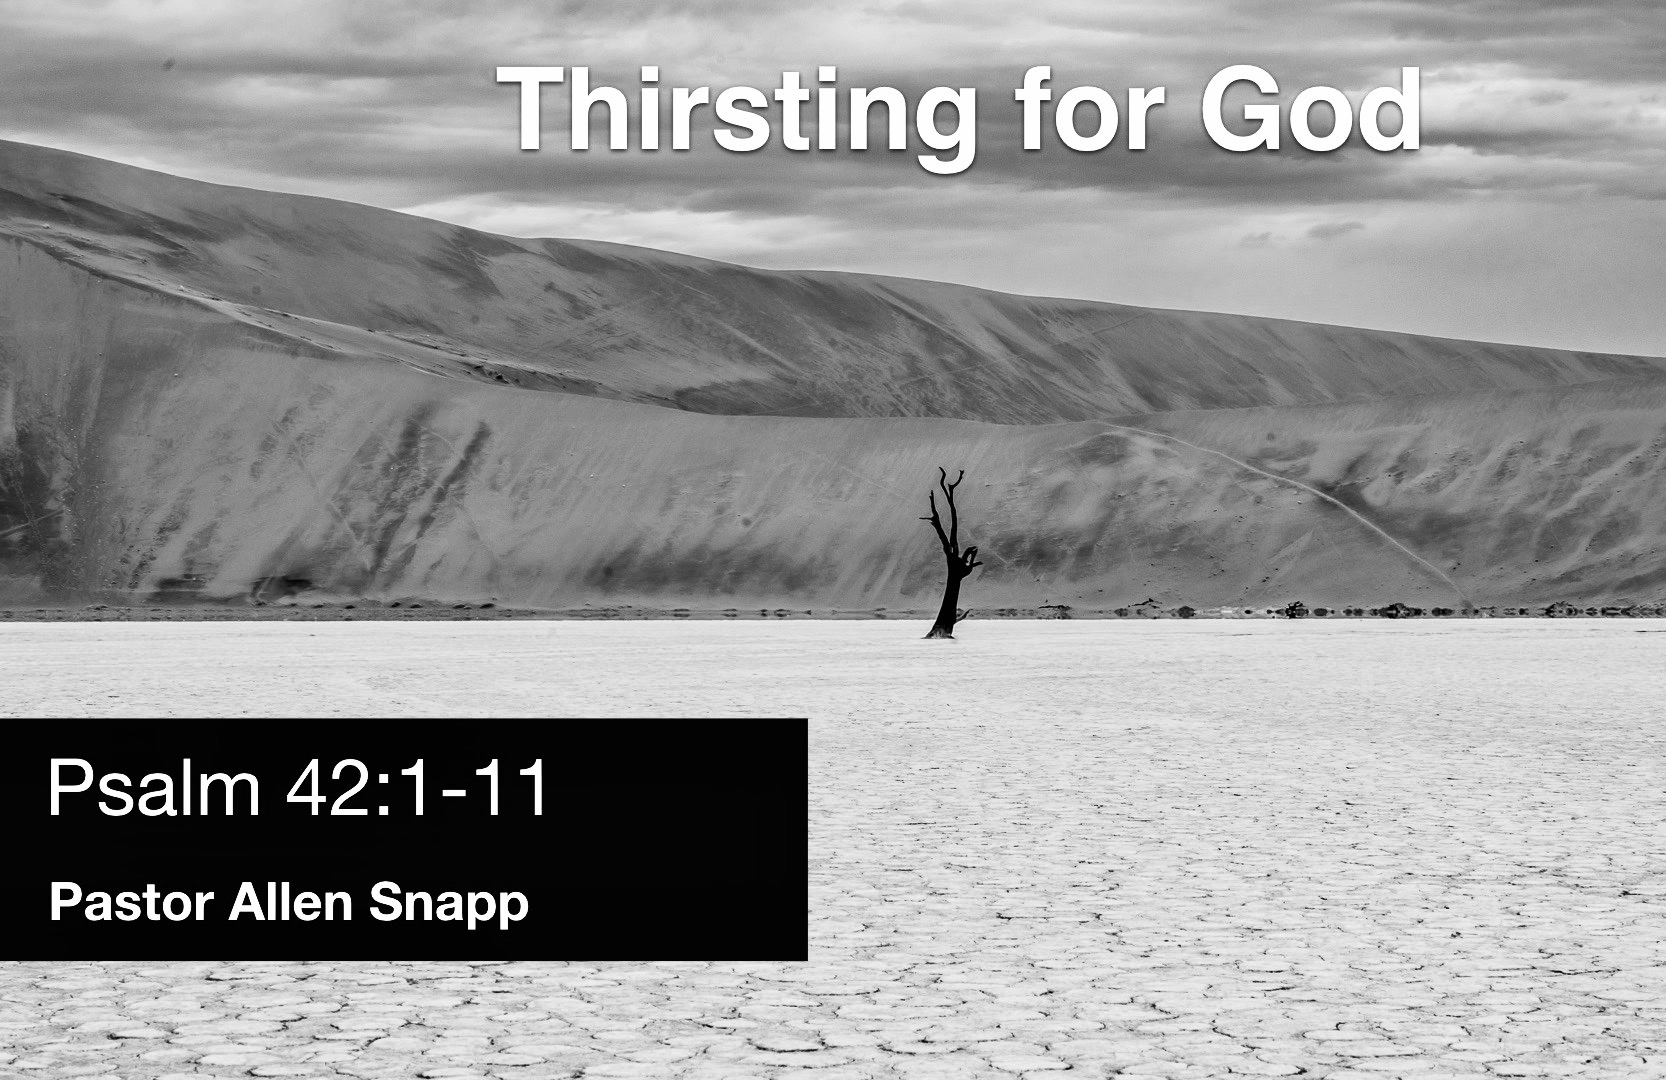 180909 Thirsting For God bw